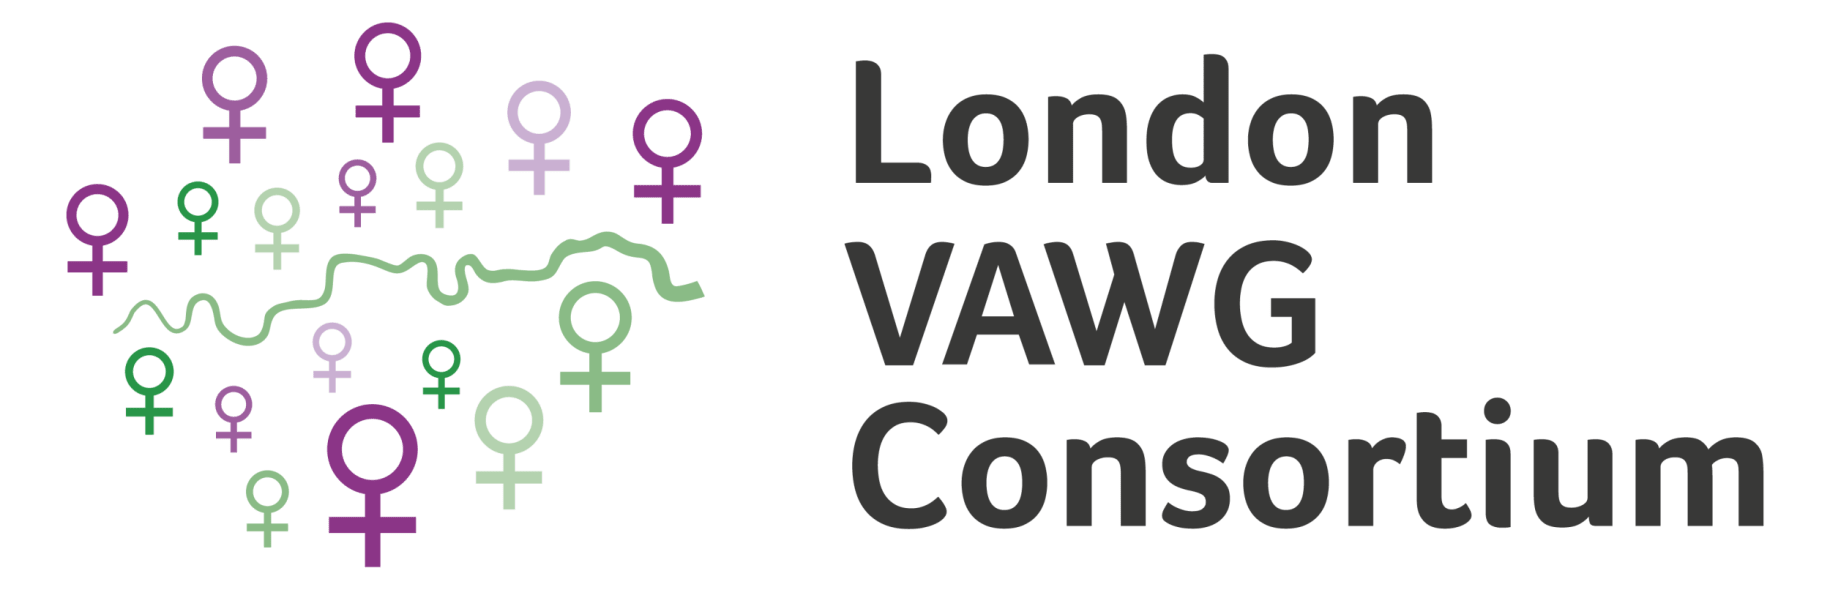 London VAWG Consortium logo